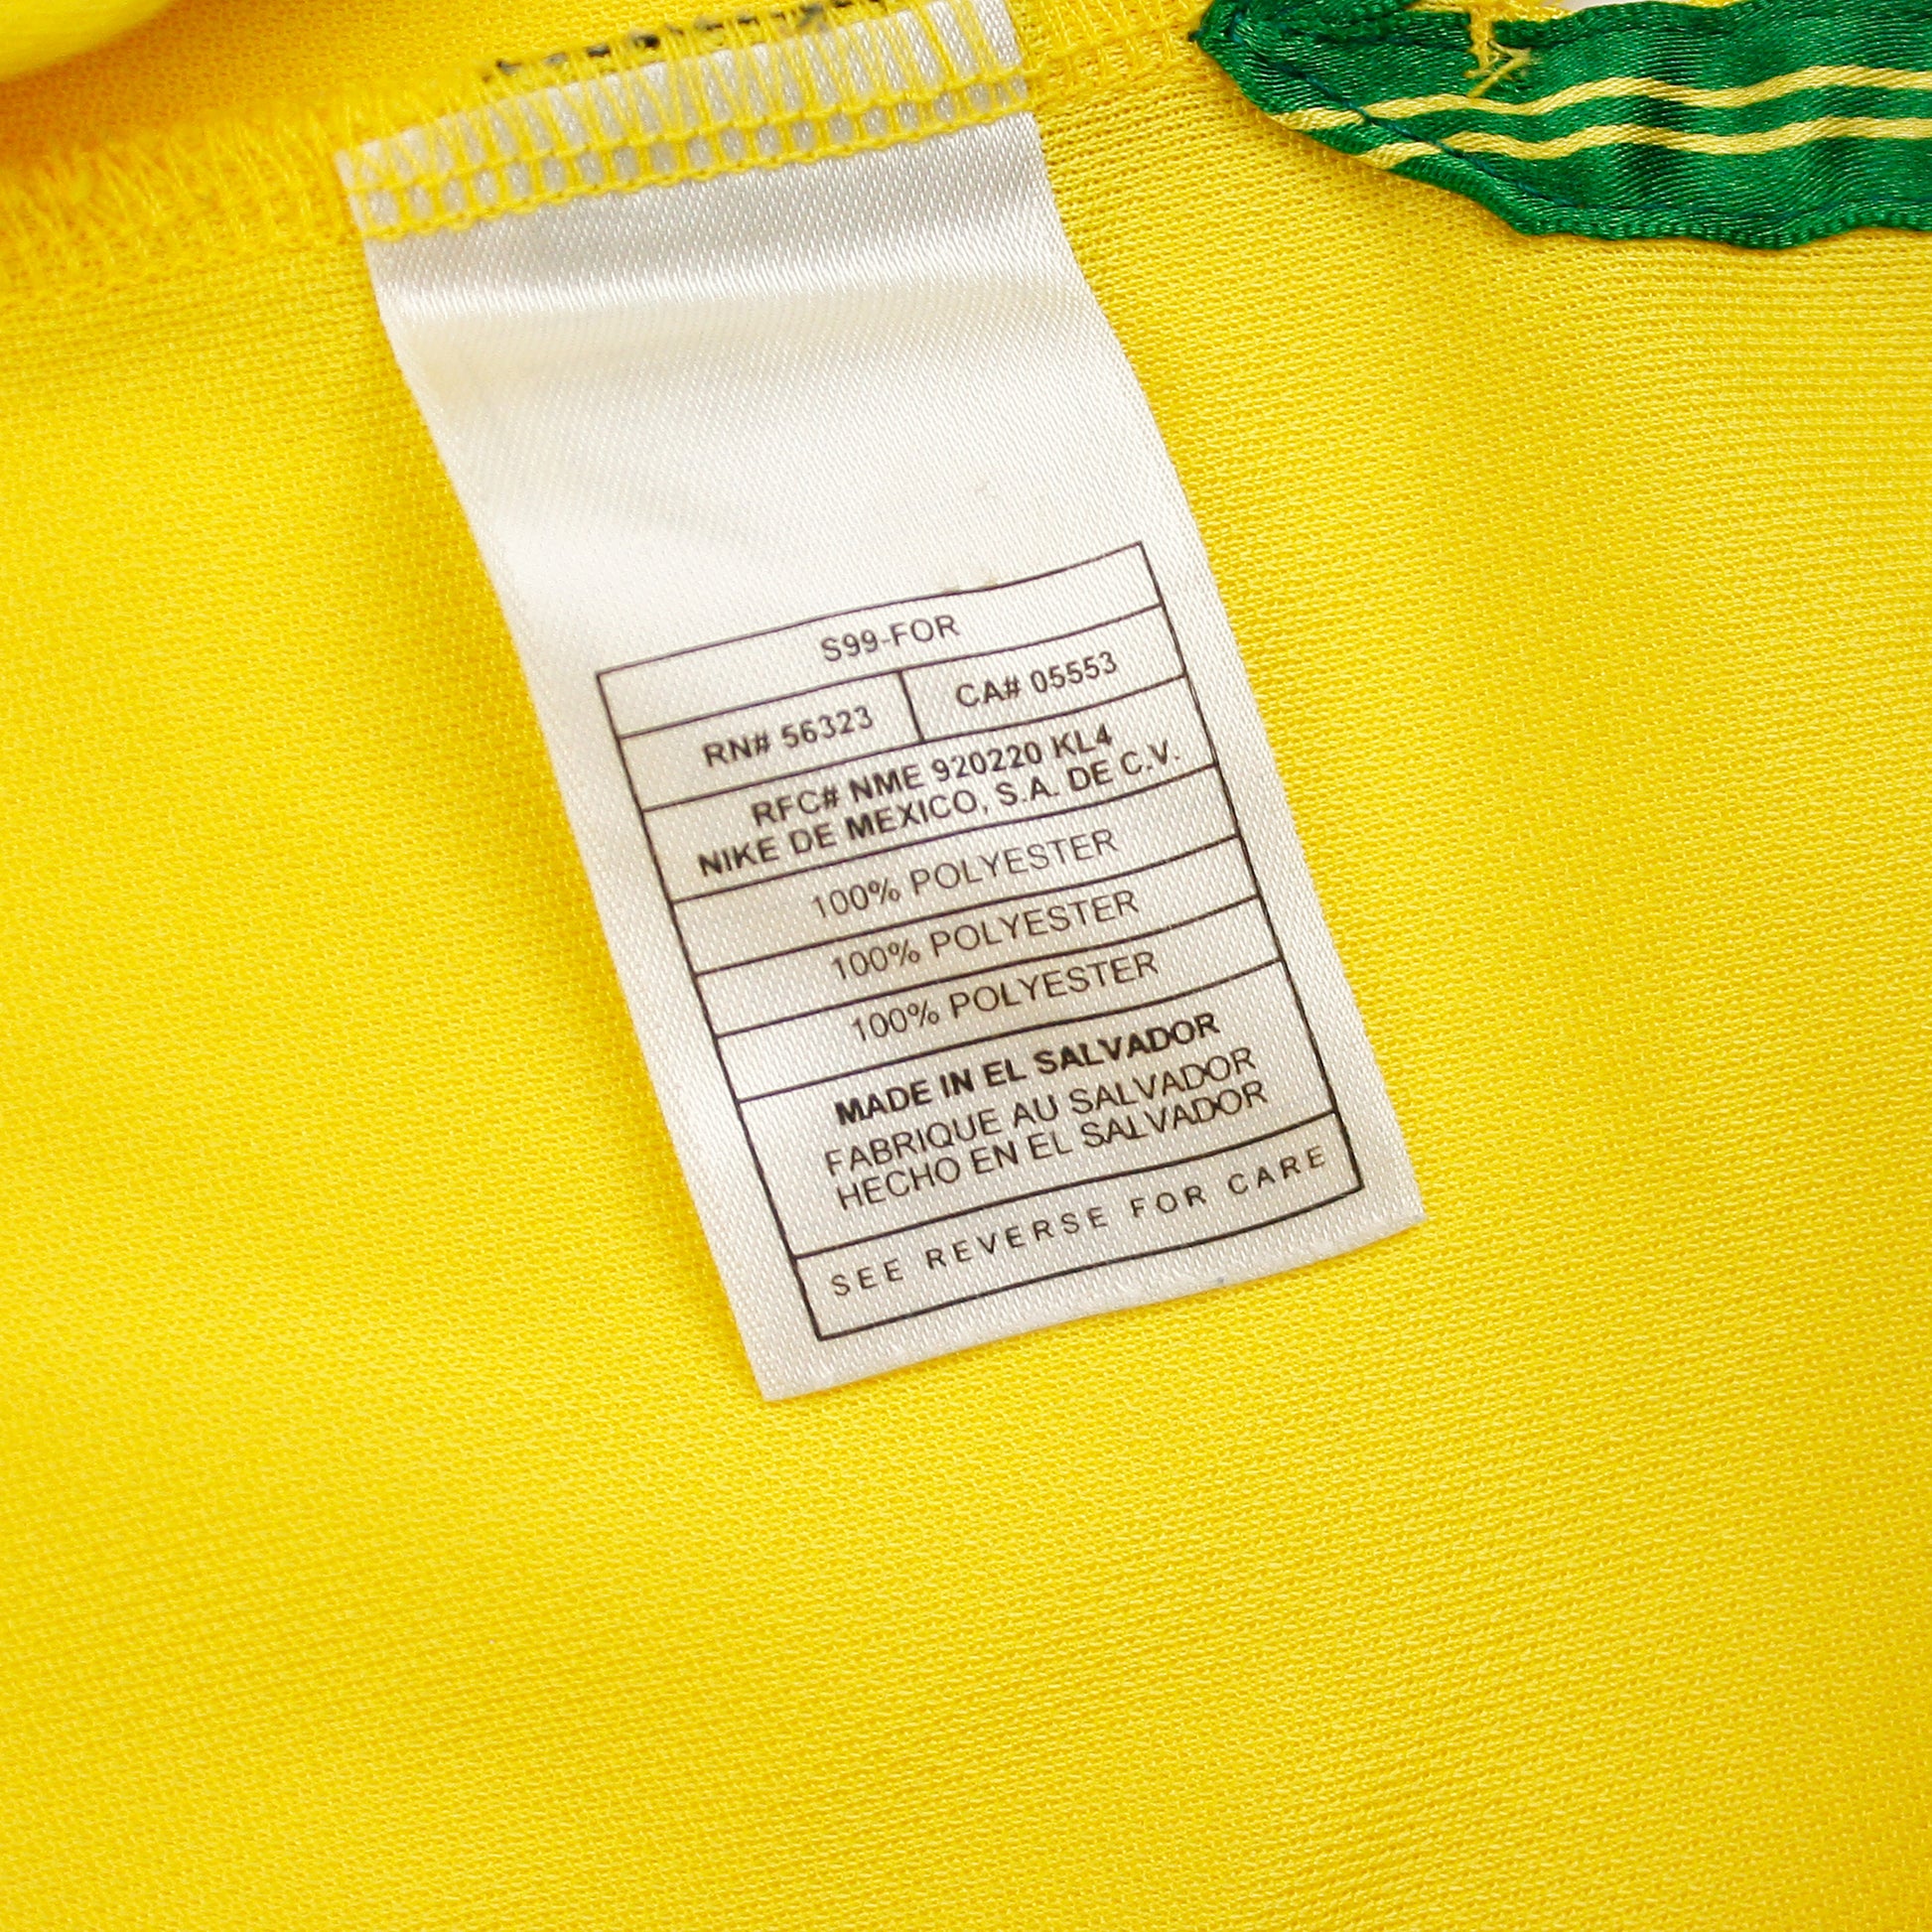 Brazil 98/00 • Home Shirt • L